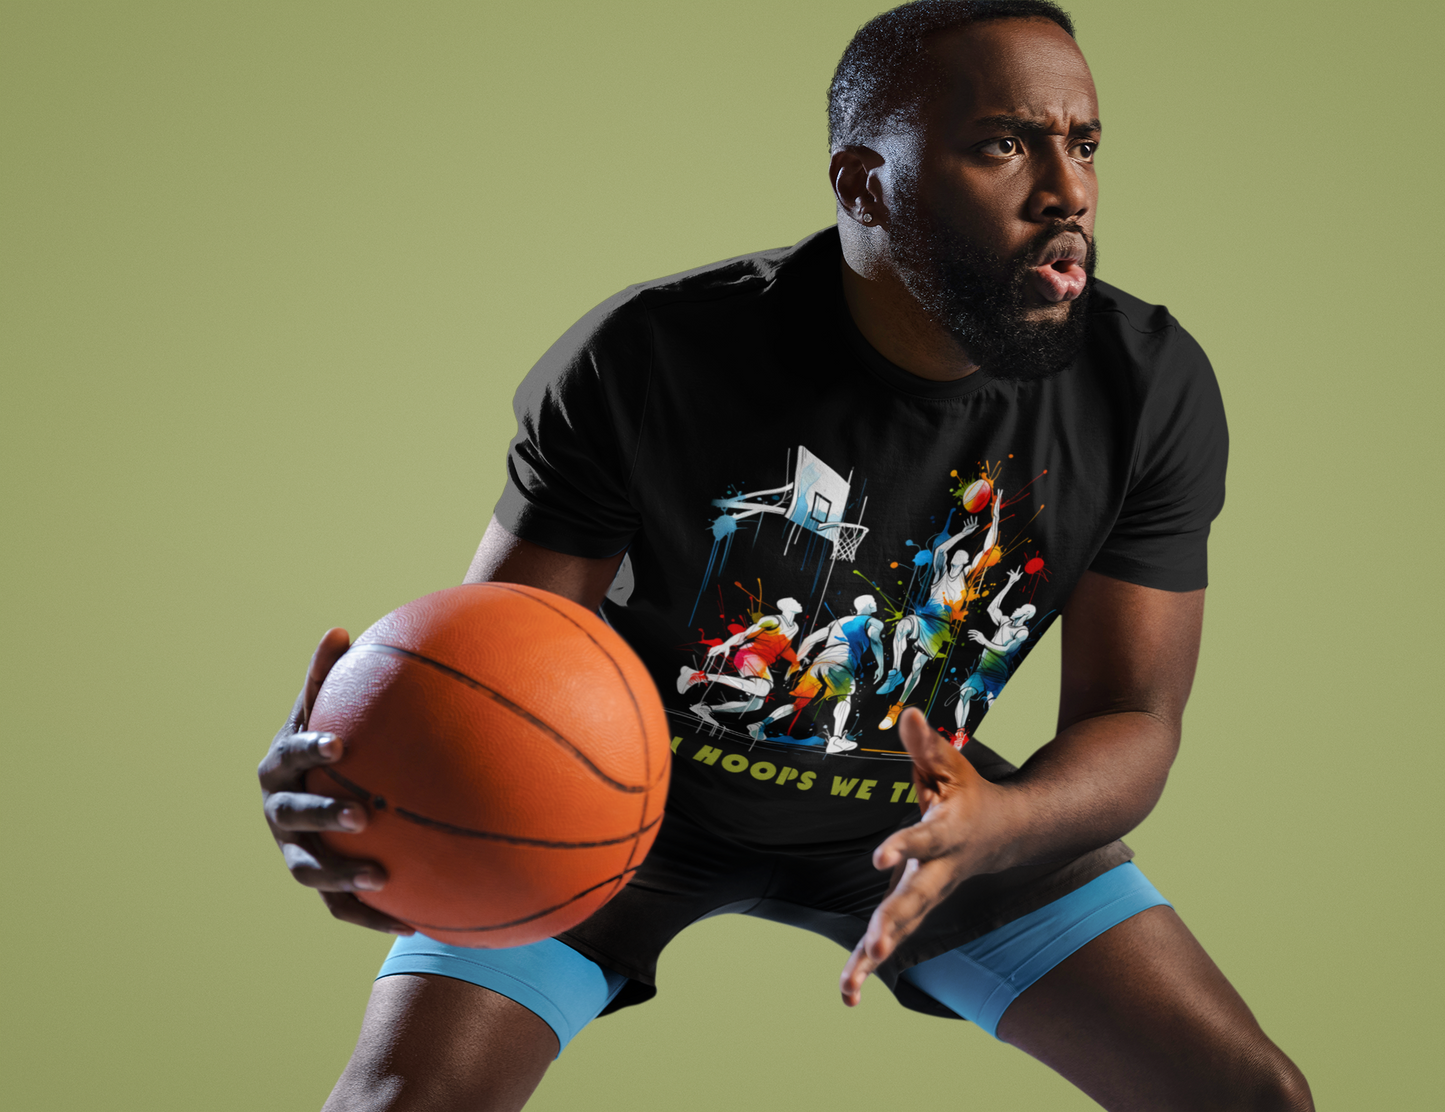 Cool Basketball Player Gift for Basketball Coach, Team Basketball Shirt Perfect Gift for Basketball Lovers